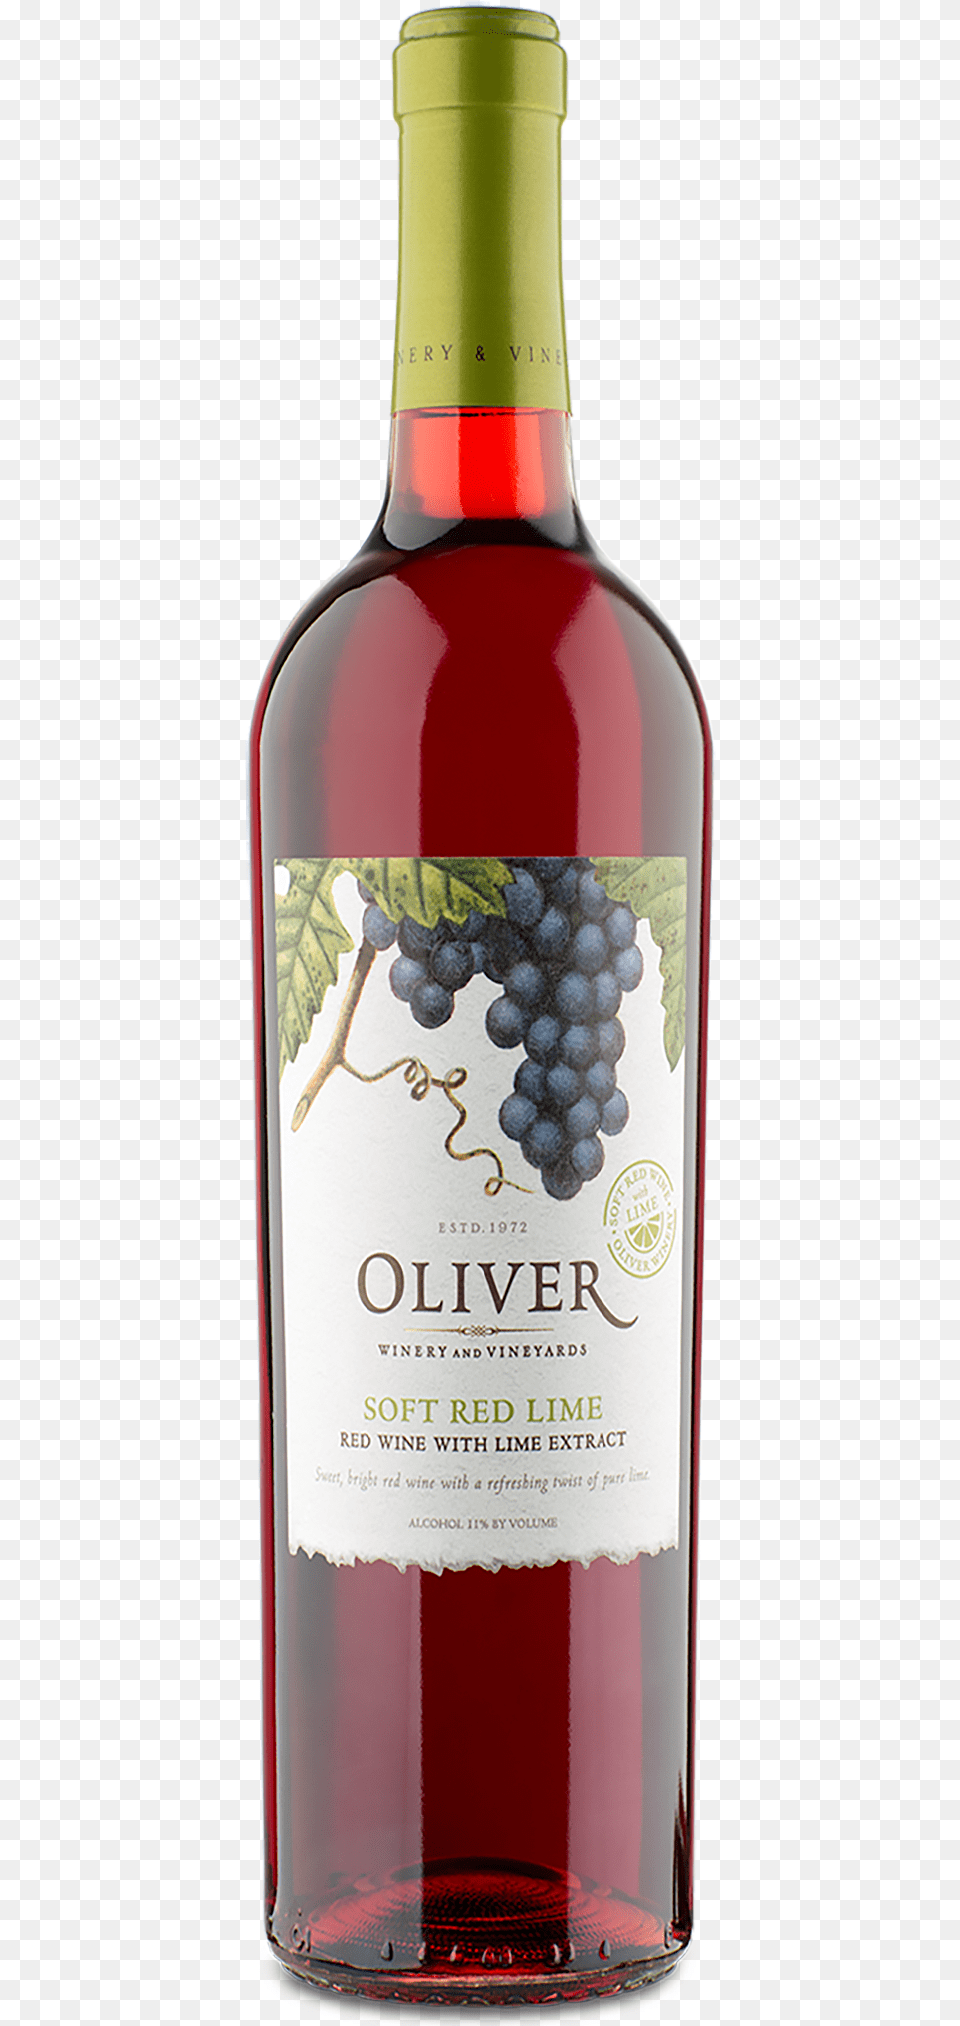 Oliver Soft Red Lime Sweet Red Wine Oliver Wine Soft Red Lime, Alcohol, Red Wine, Liquor, Beverage Png Image